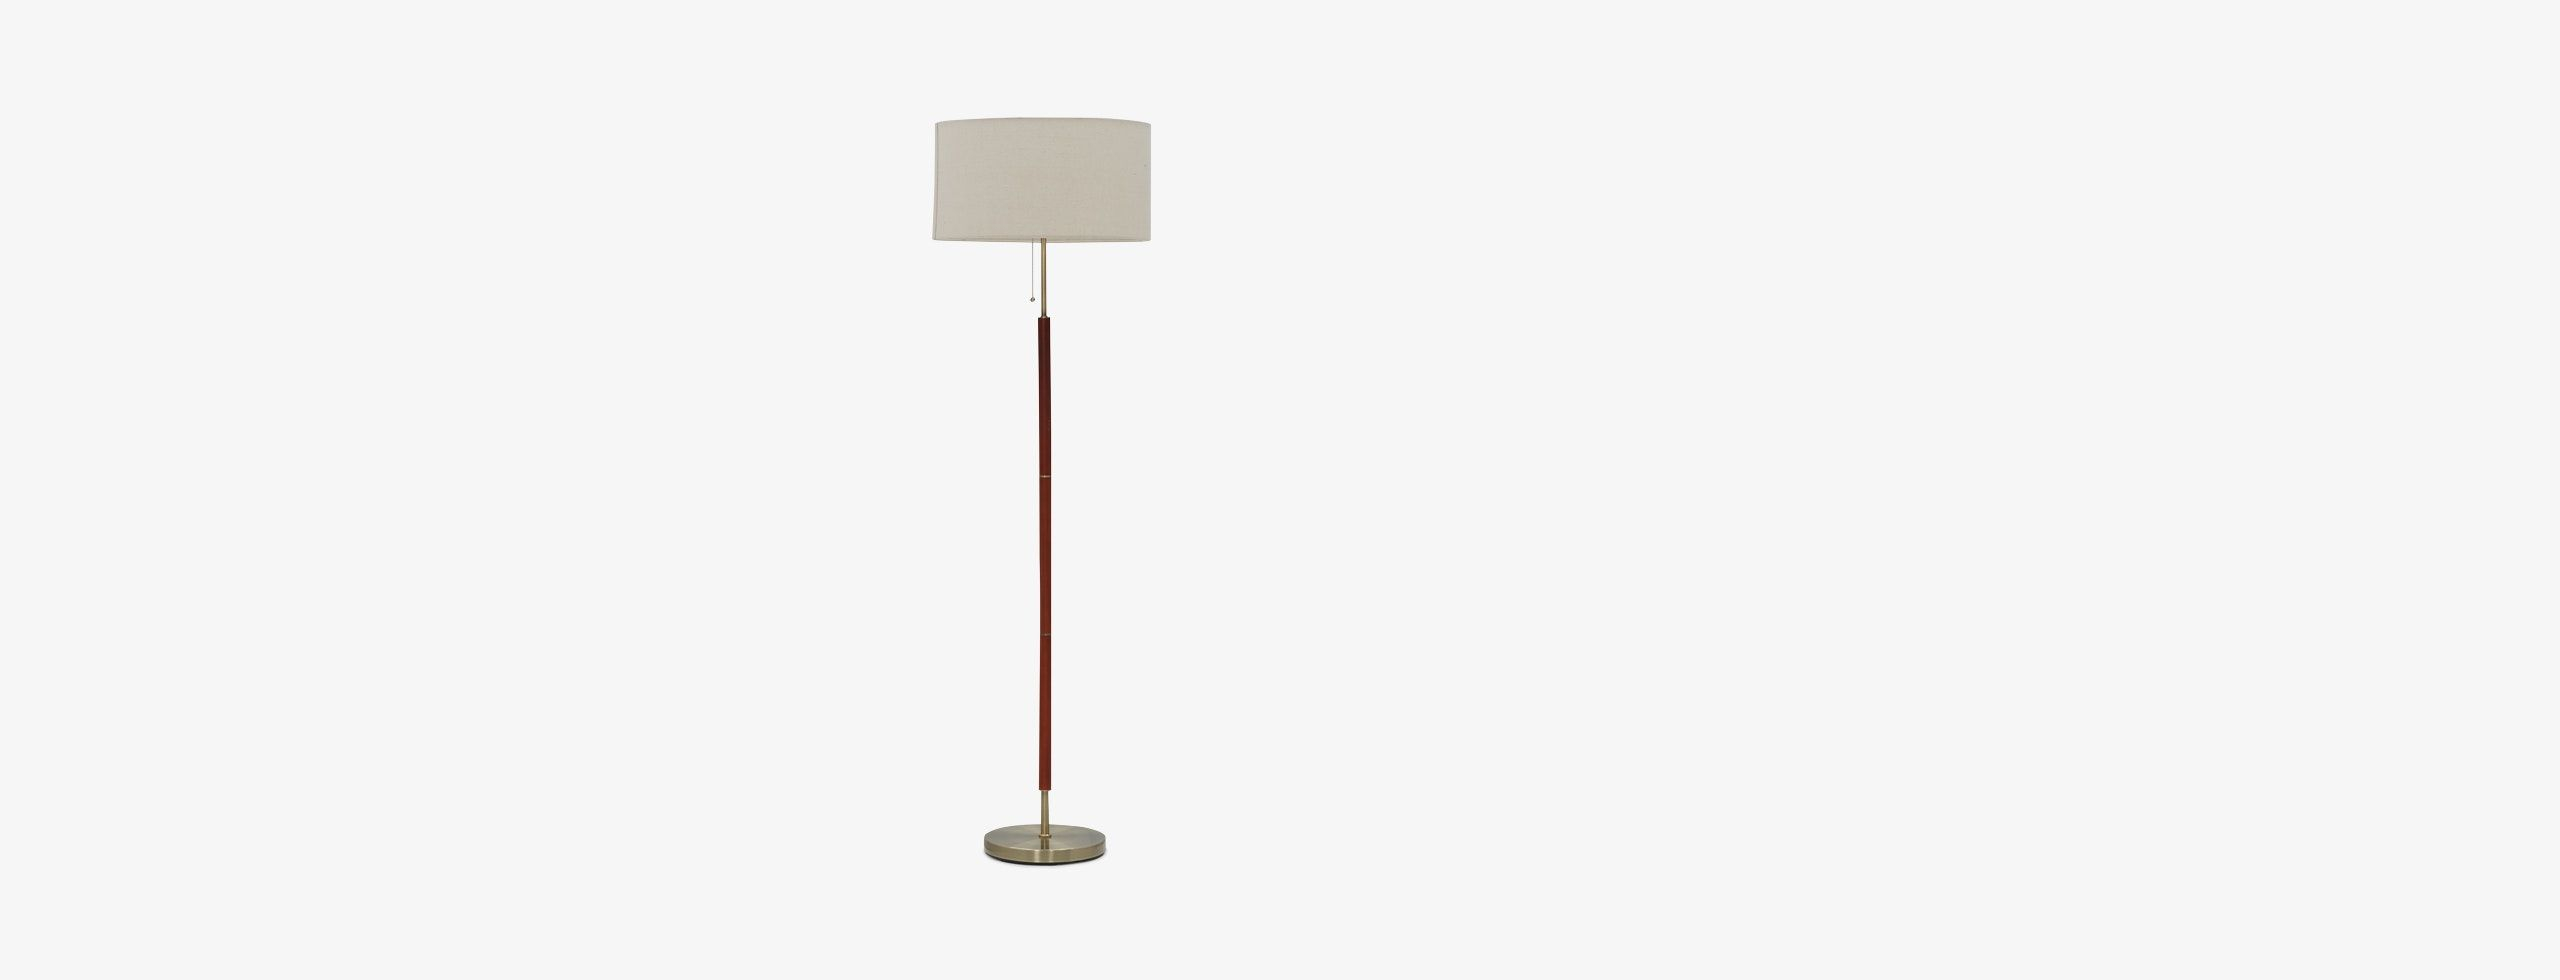 Ebo Floor Lamp In 2019 Home Interior Wood Lamps Floor inside proportions 2560 X 980